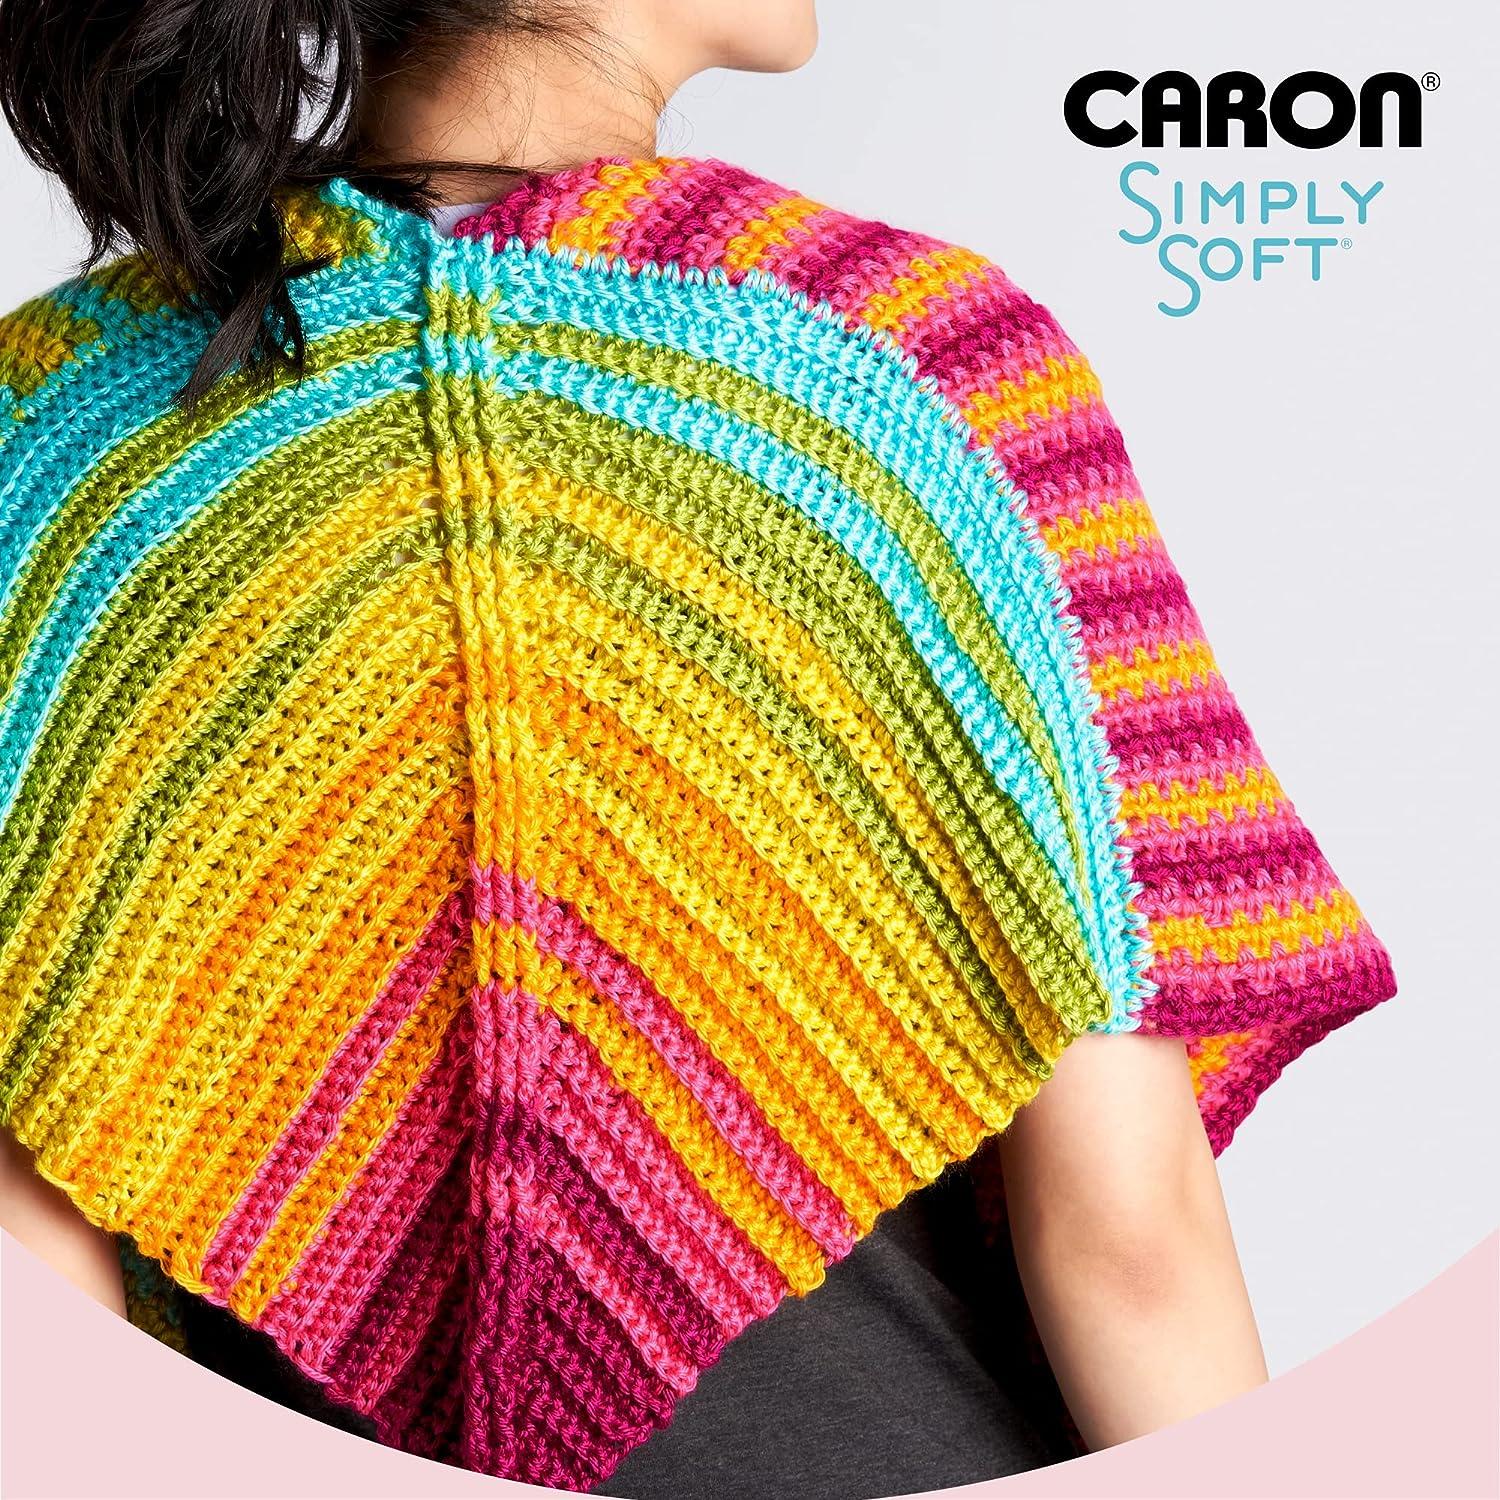 Caron One Pound Solids Yarn, 16oz, Gauge 4 Medium, 100% Acrylic - Medium  Grey Mix- For Crochet, Knitting & Crafting ( 1 Piece )